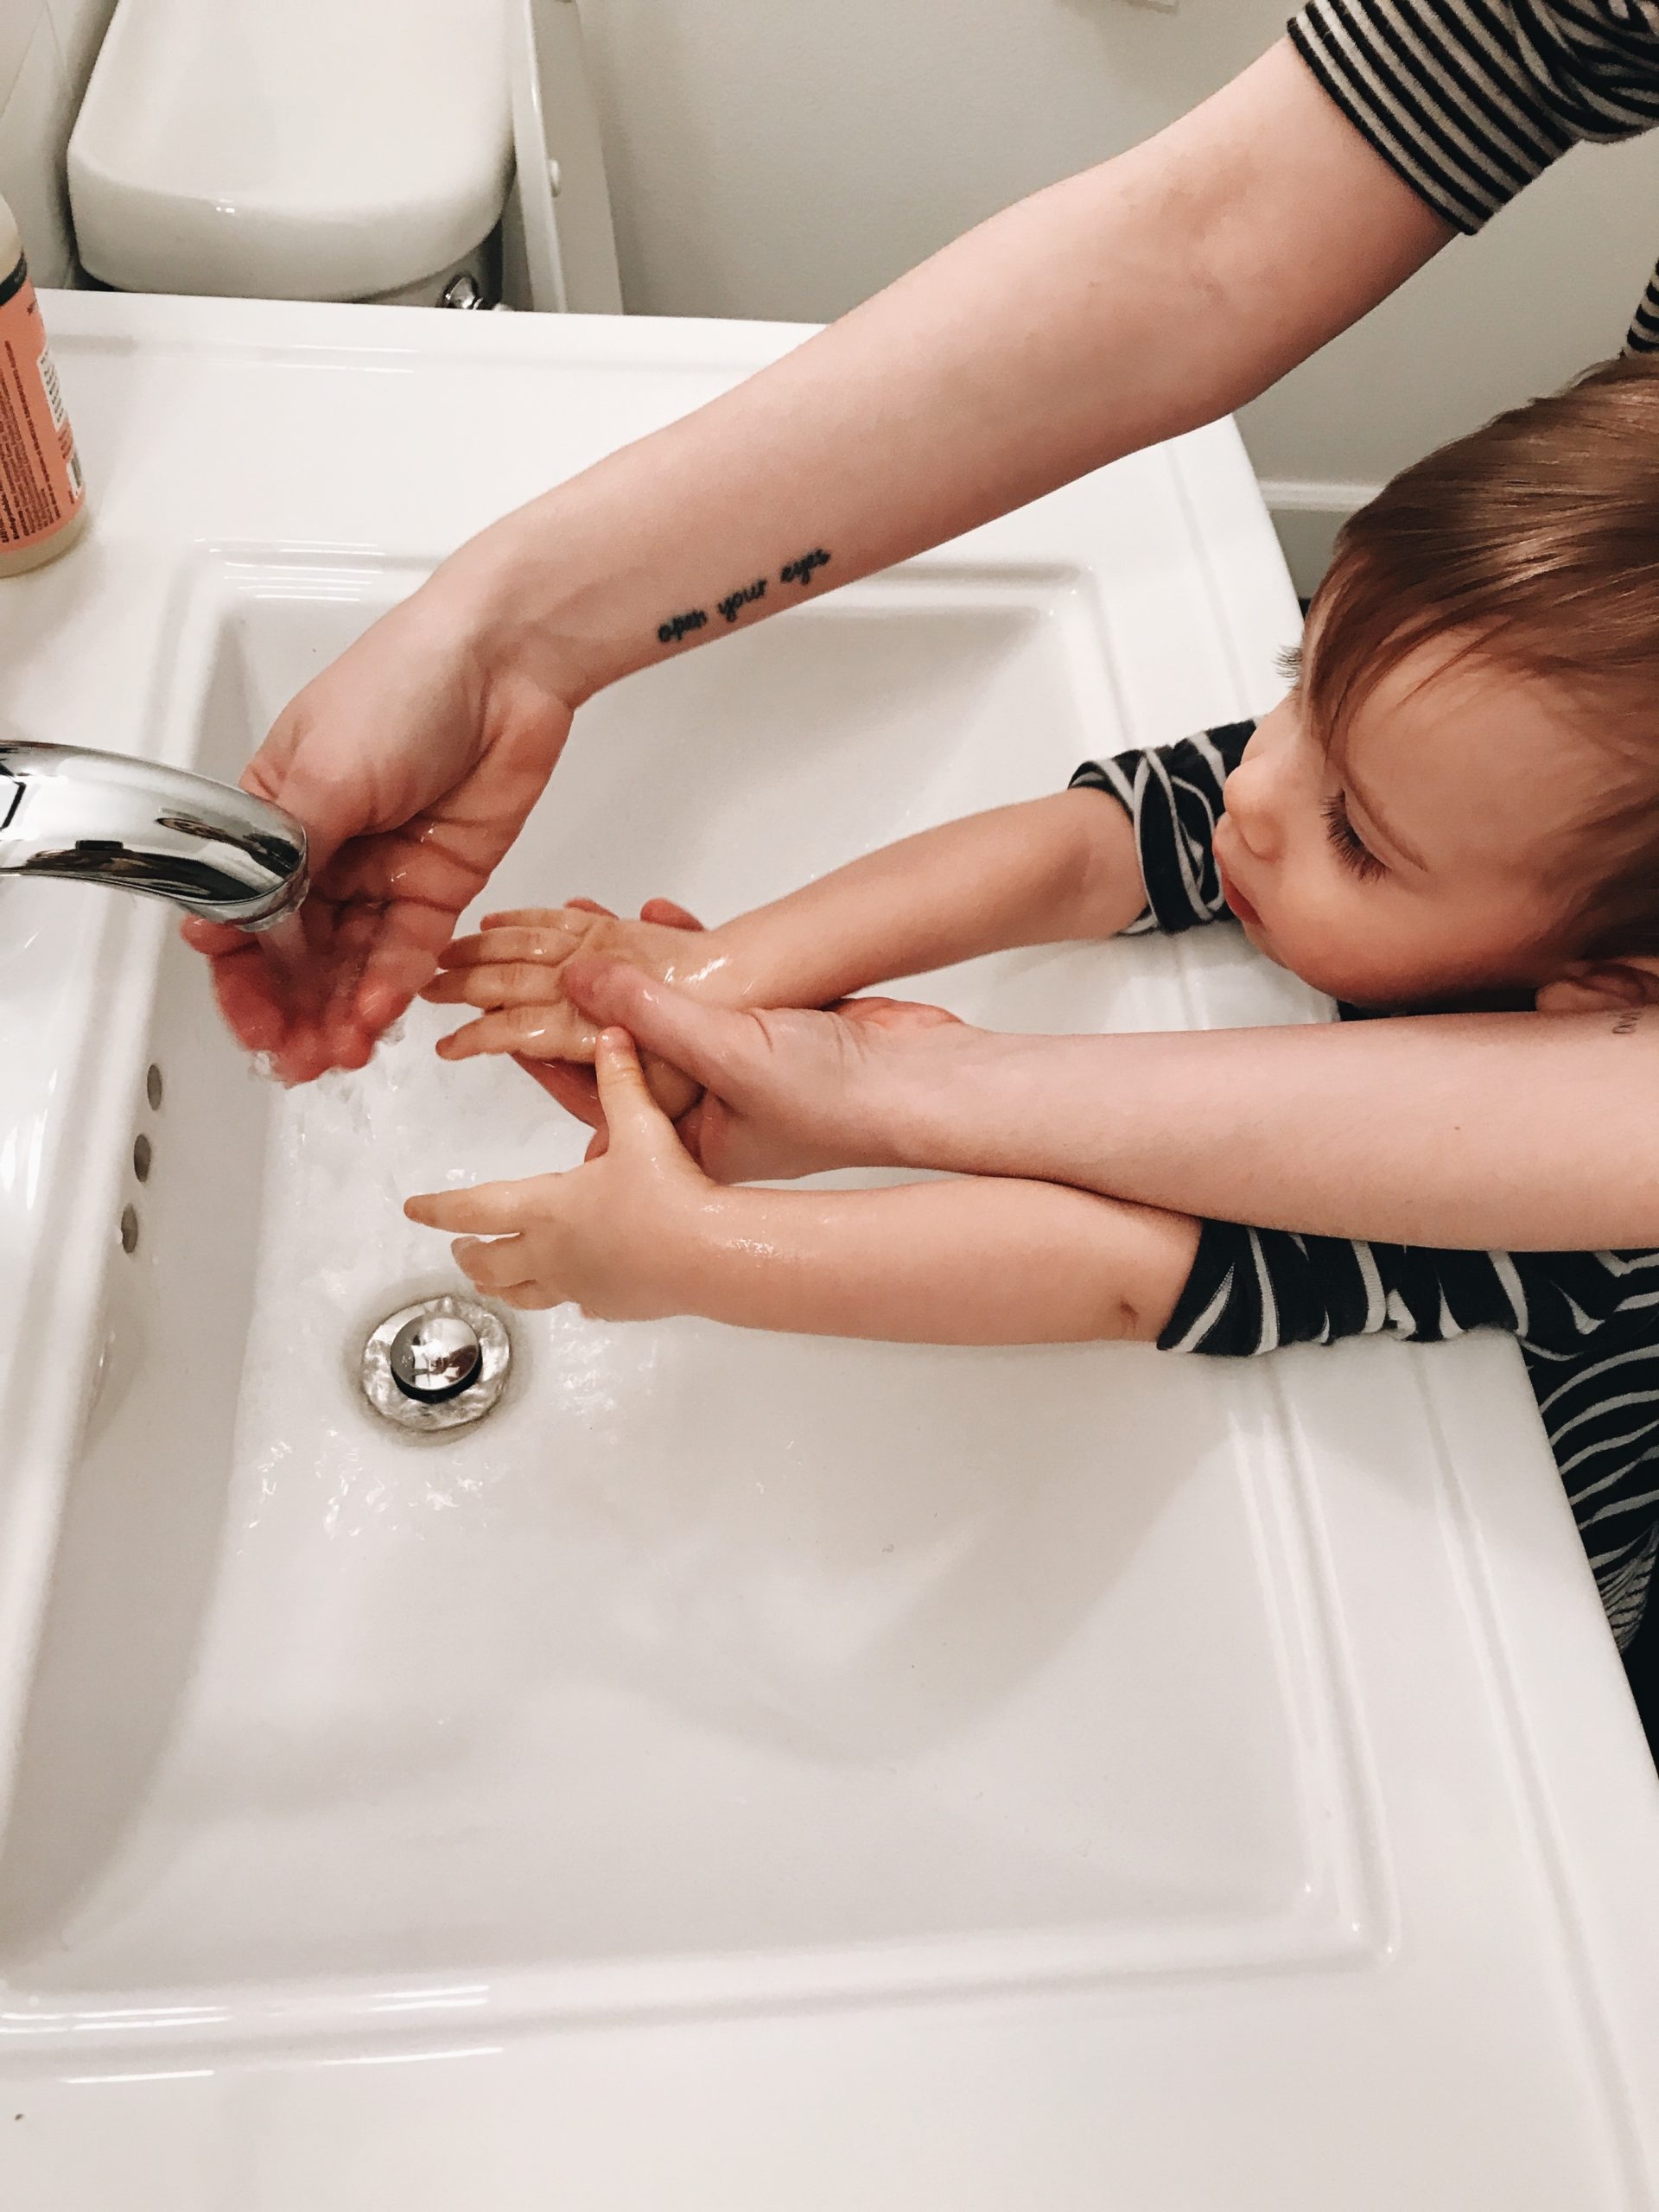 parent washing a child's hands